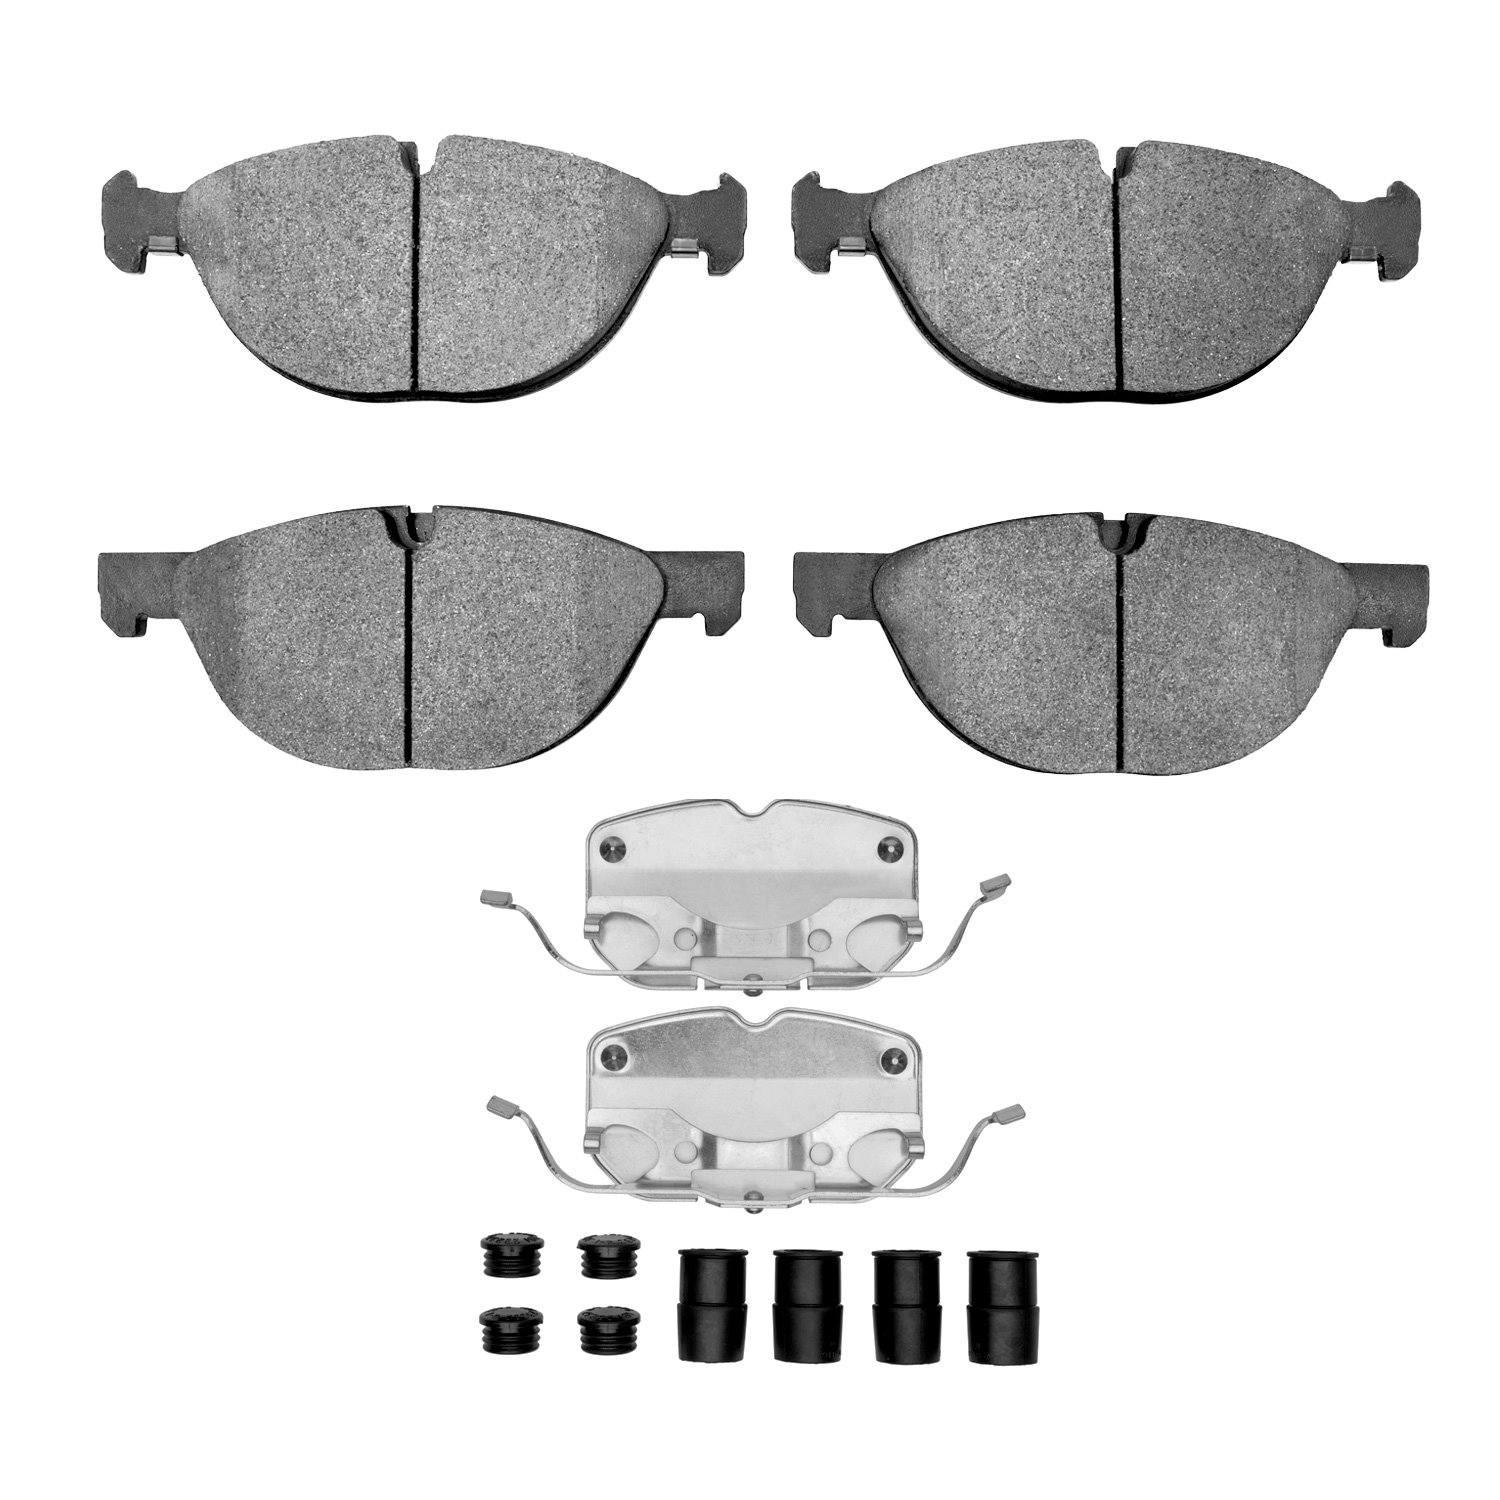 1551-1381-01 5000 Advanced Ceramic Brake Pads & Hardware Kit, 2014-2019 BMW, Position: Front